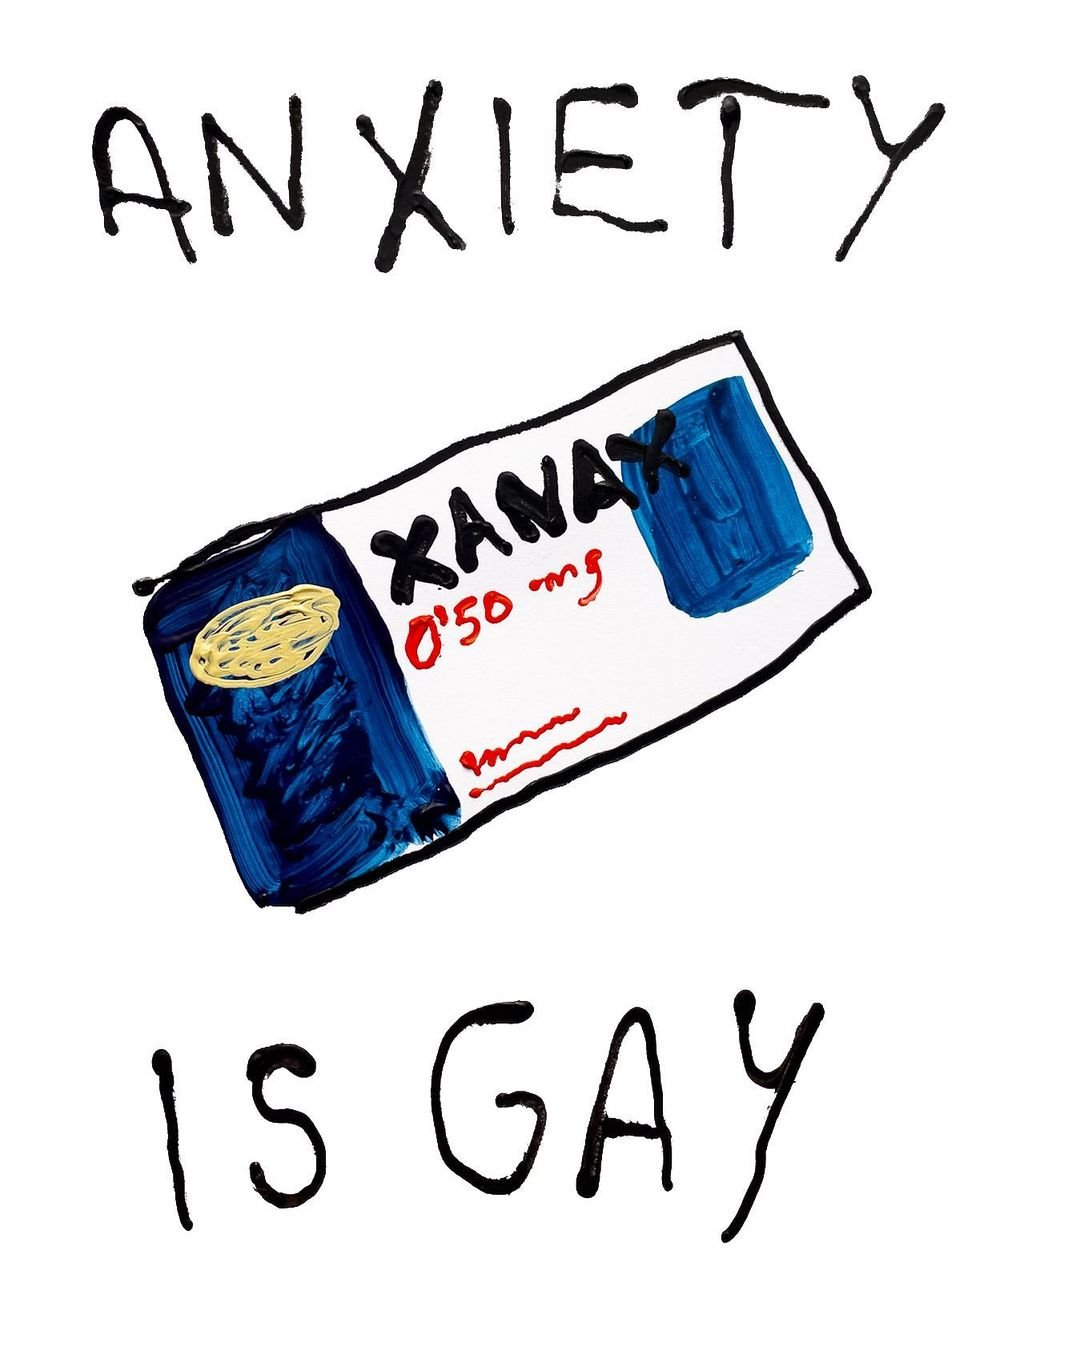 Anxiety gay